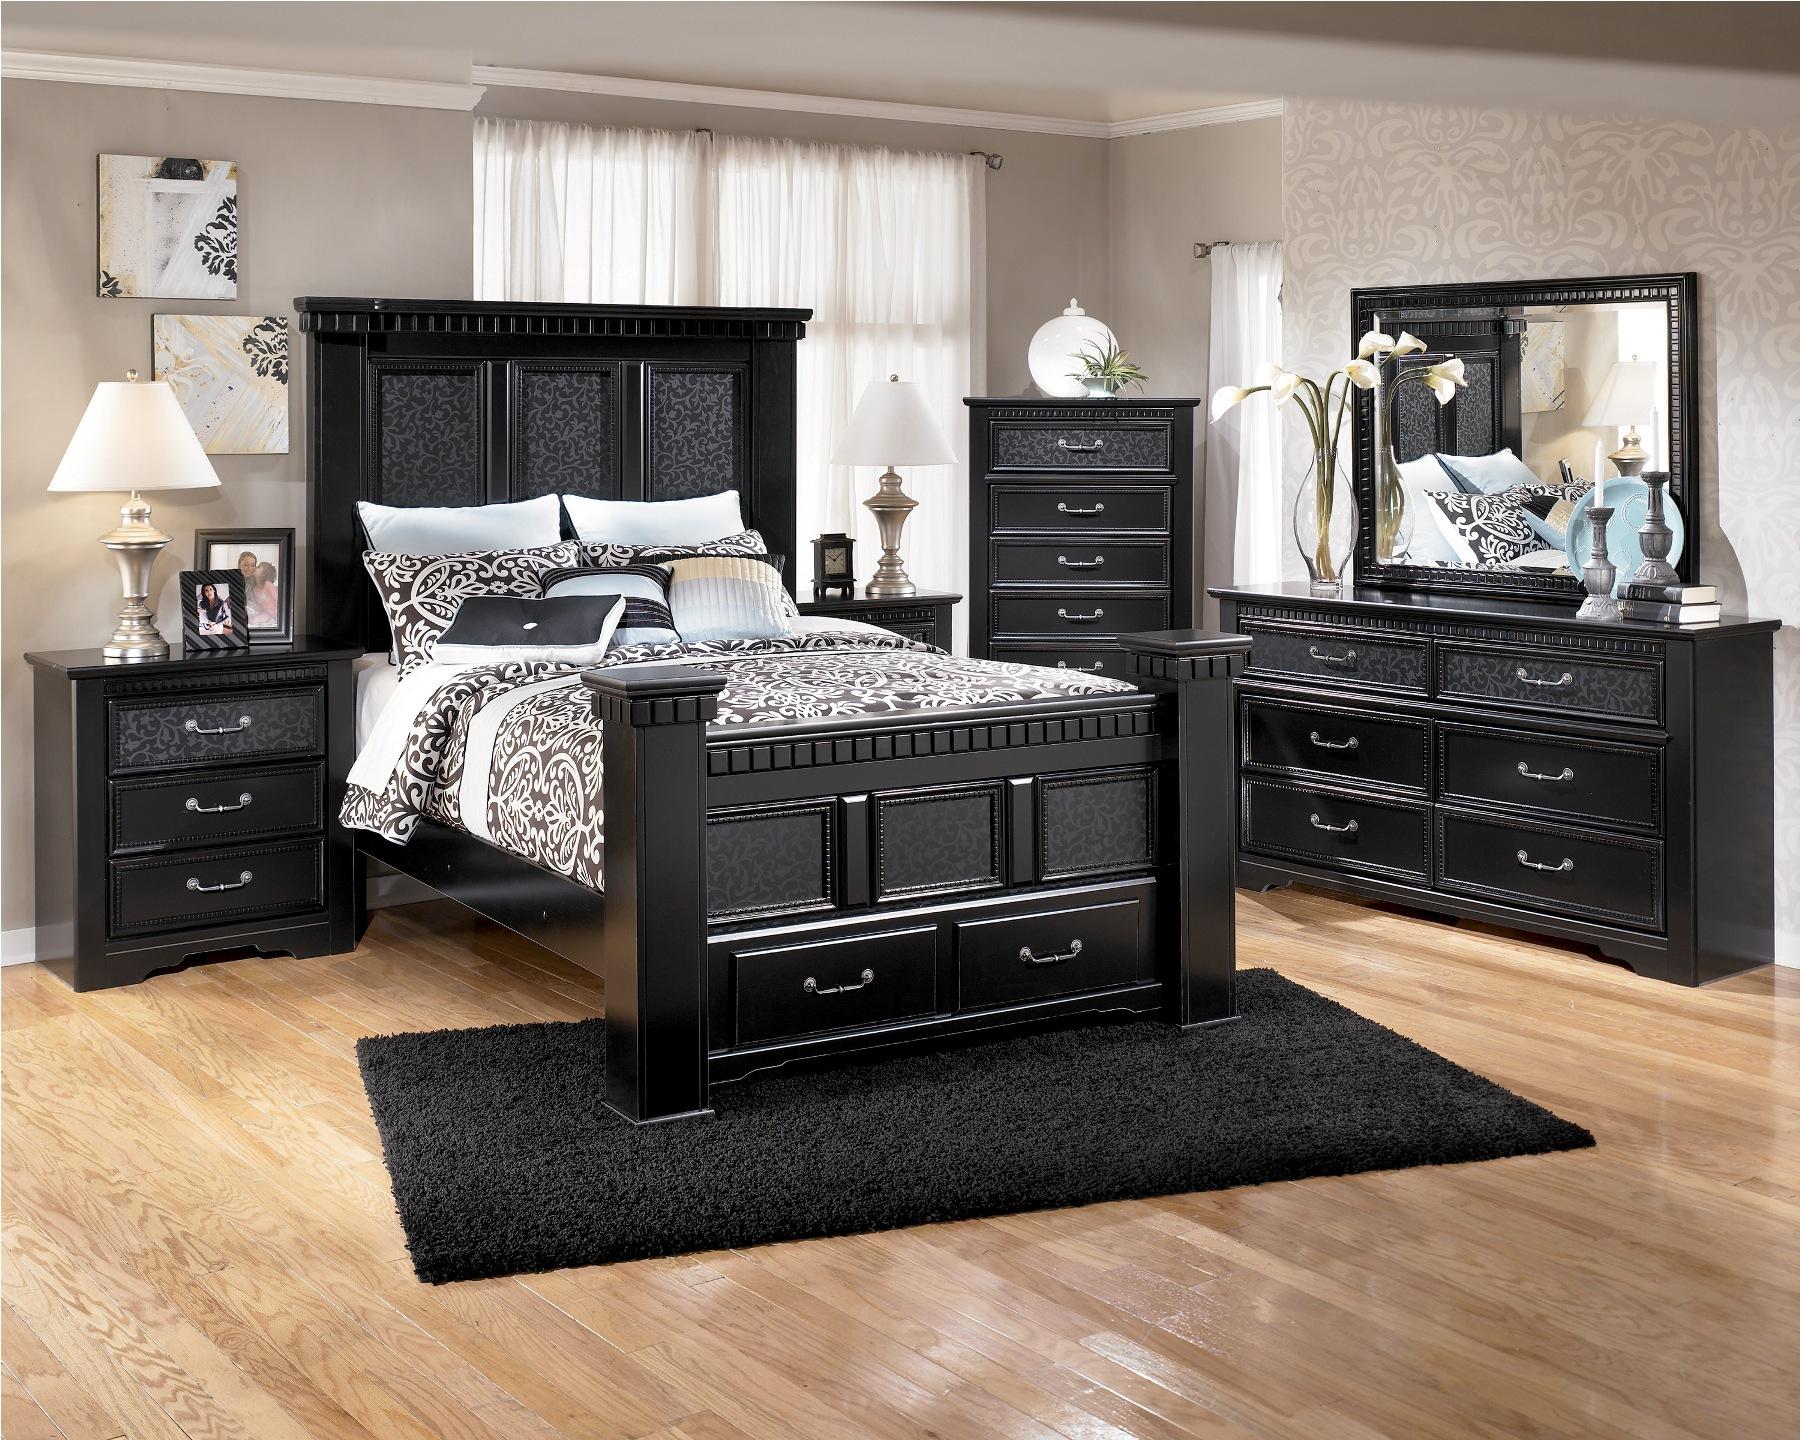 black furniture decorate bedroom